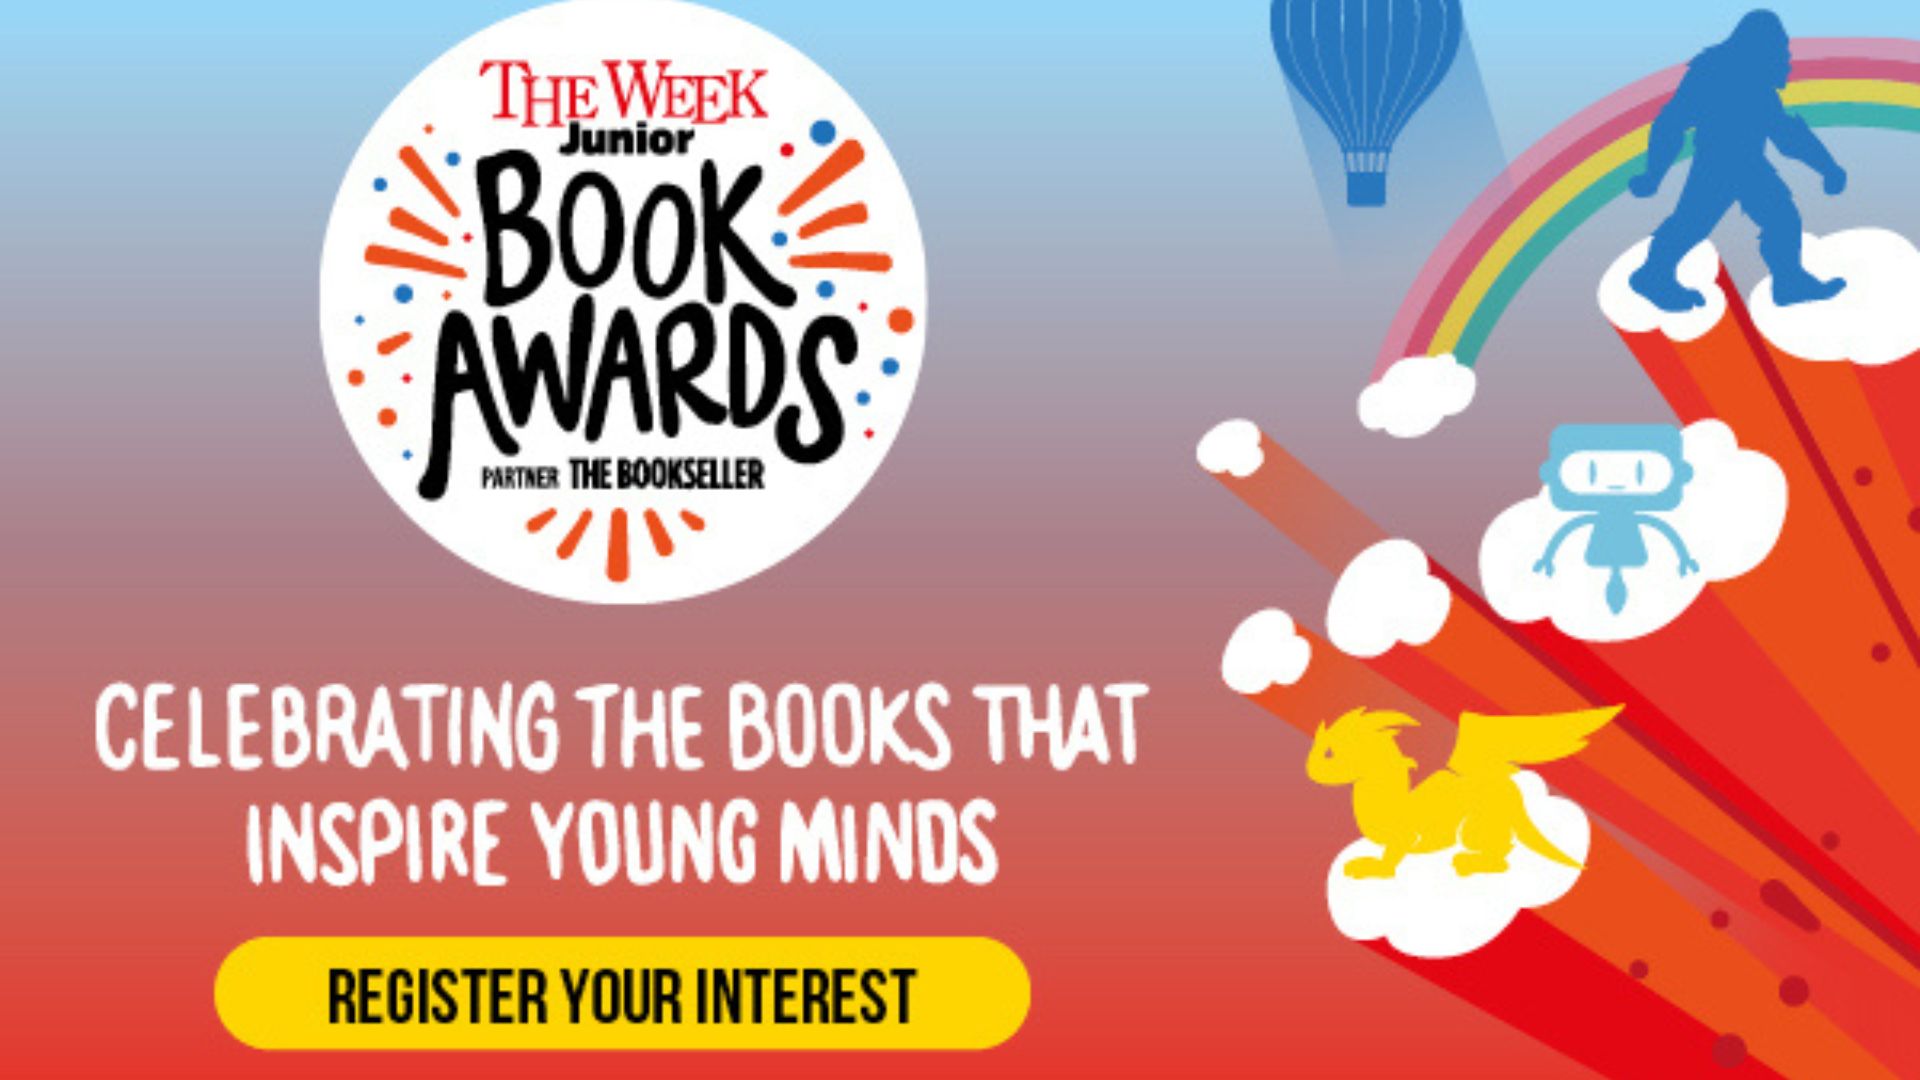 The Week Junior Book Awards